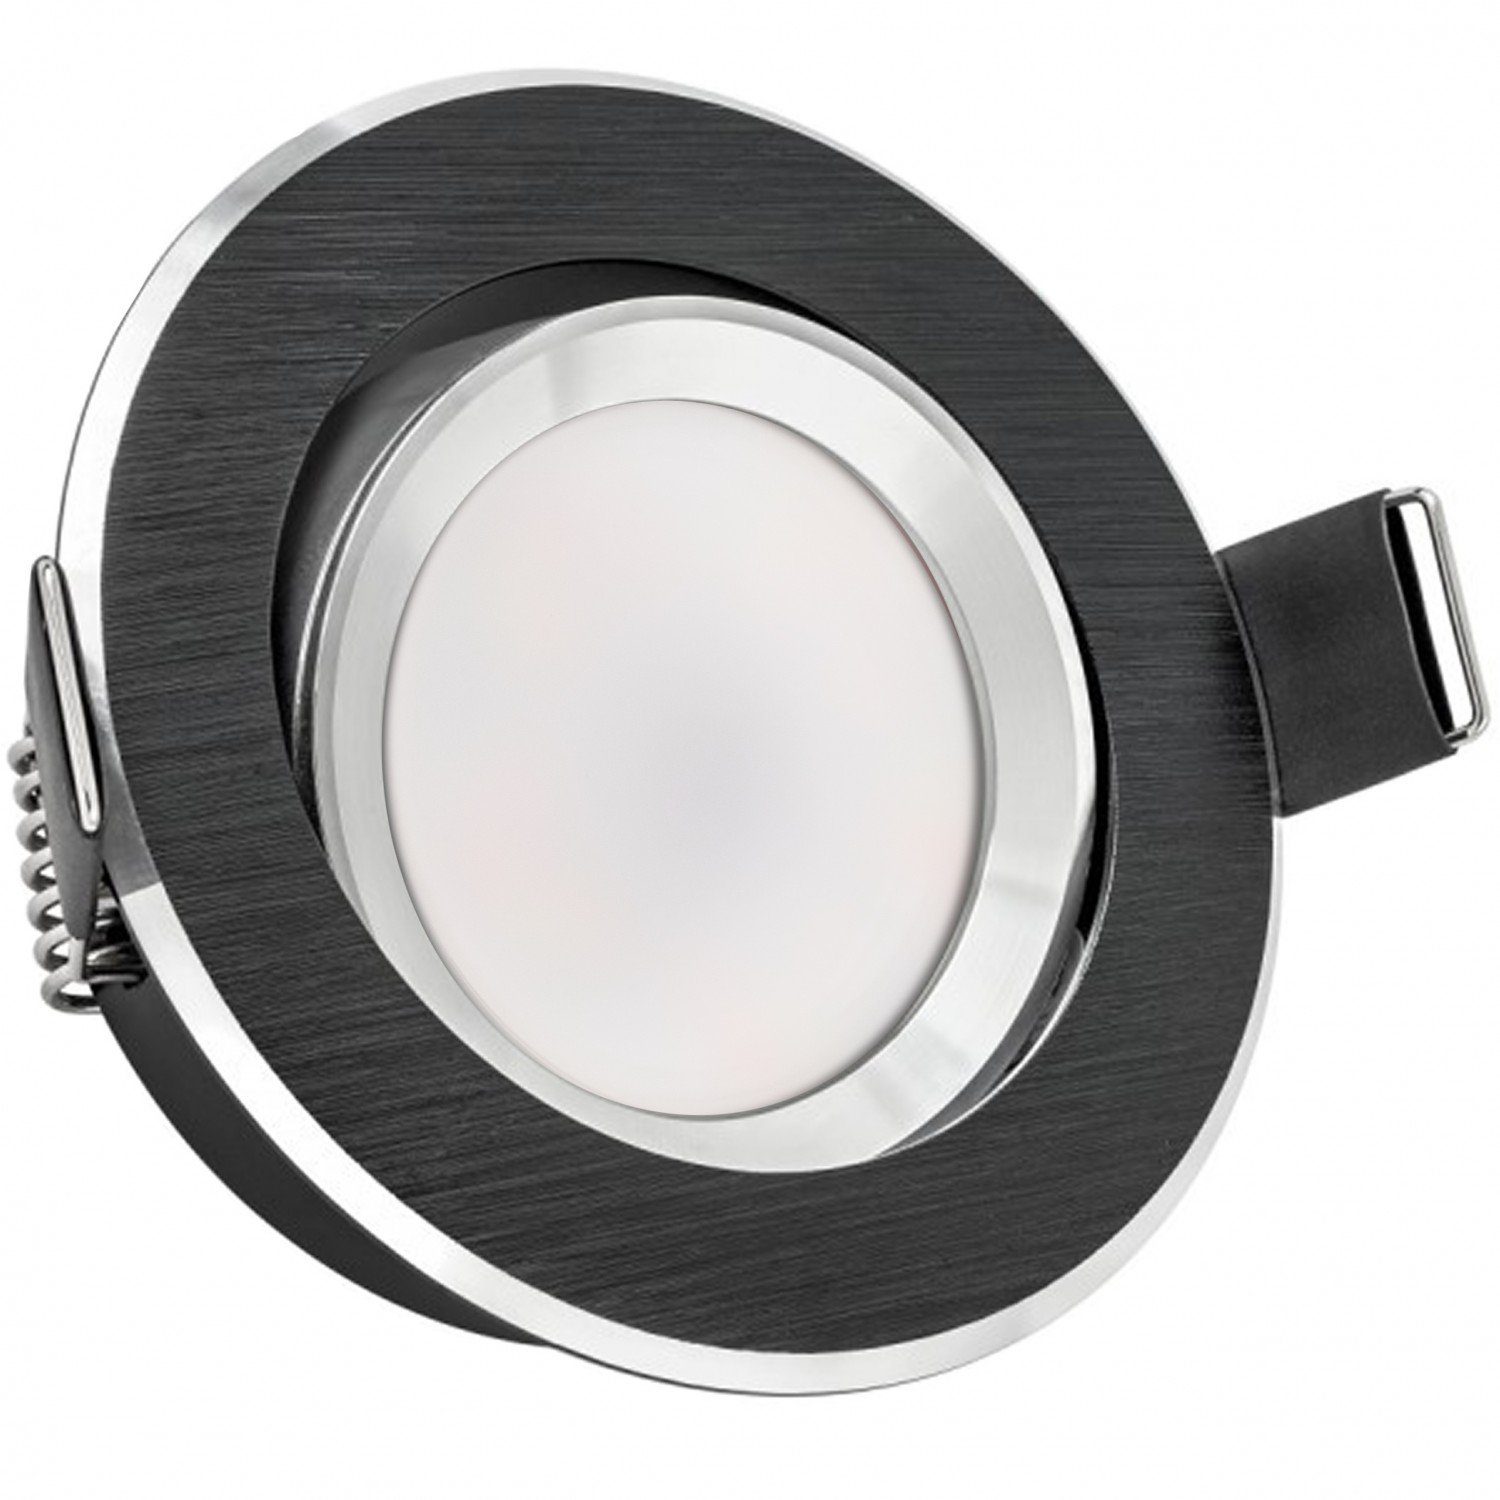 Einbaustrahler LEDANDO flach Einbaustrahler Leuchtmittel LED LED 5W von mit schwarz extra in Set